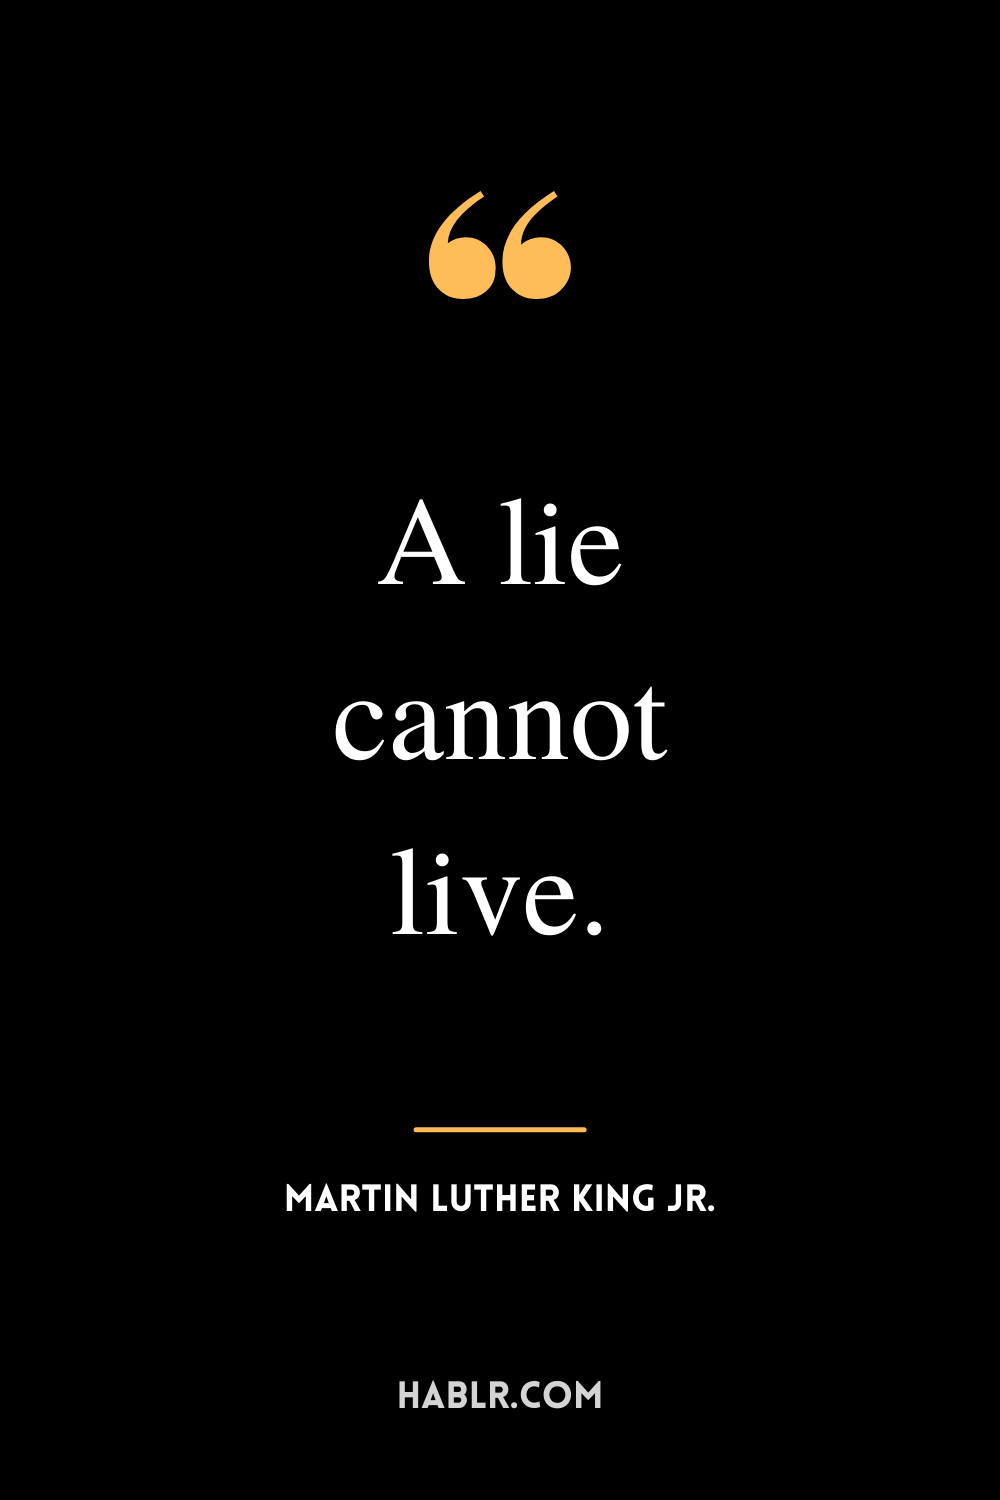 “A lie cannot live.” -Martin Luther King Jr.